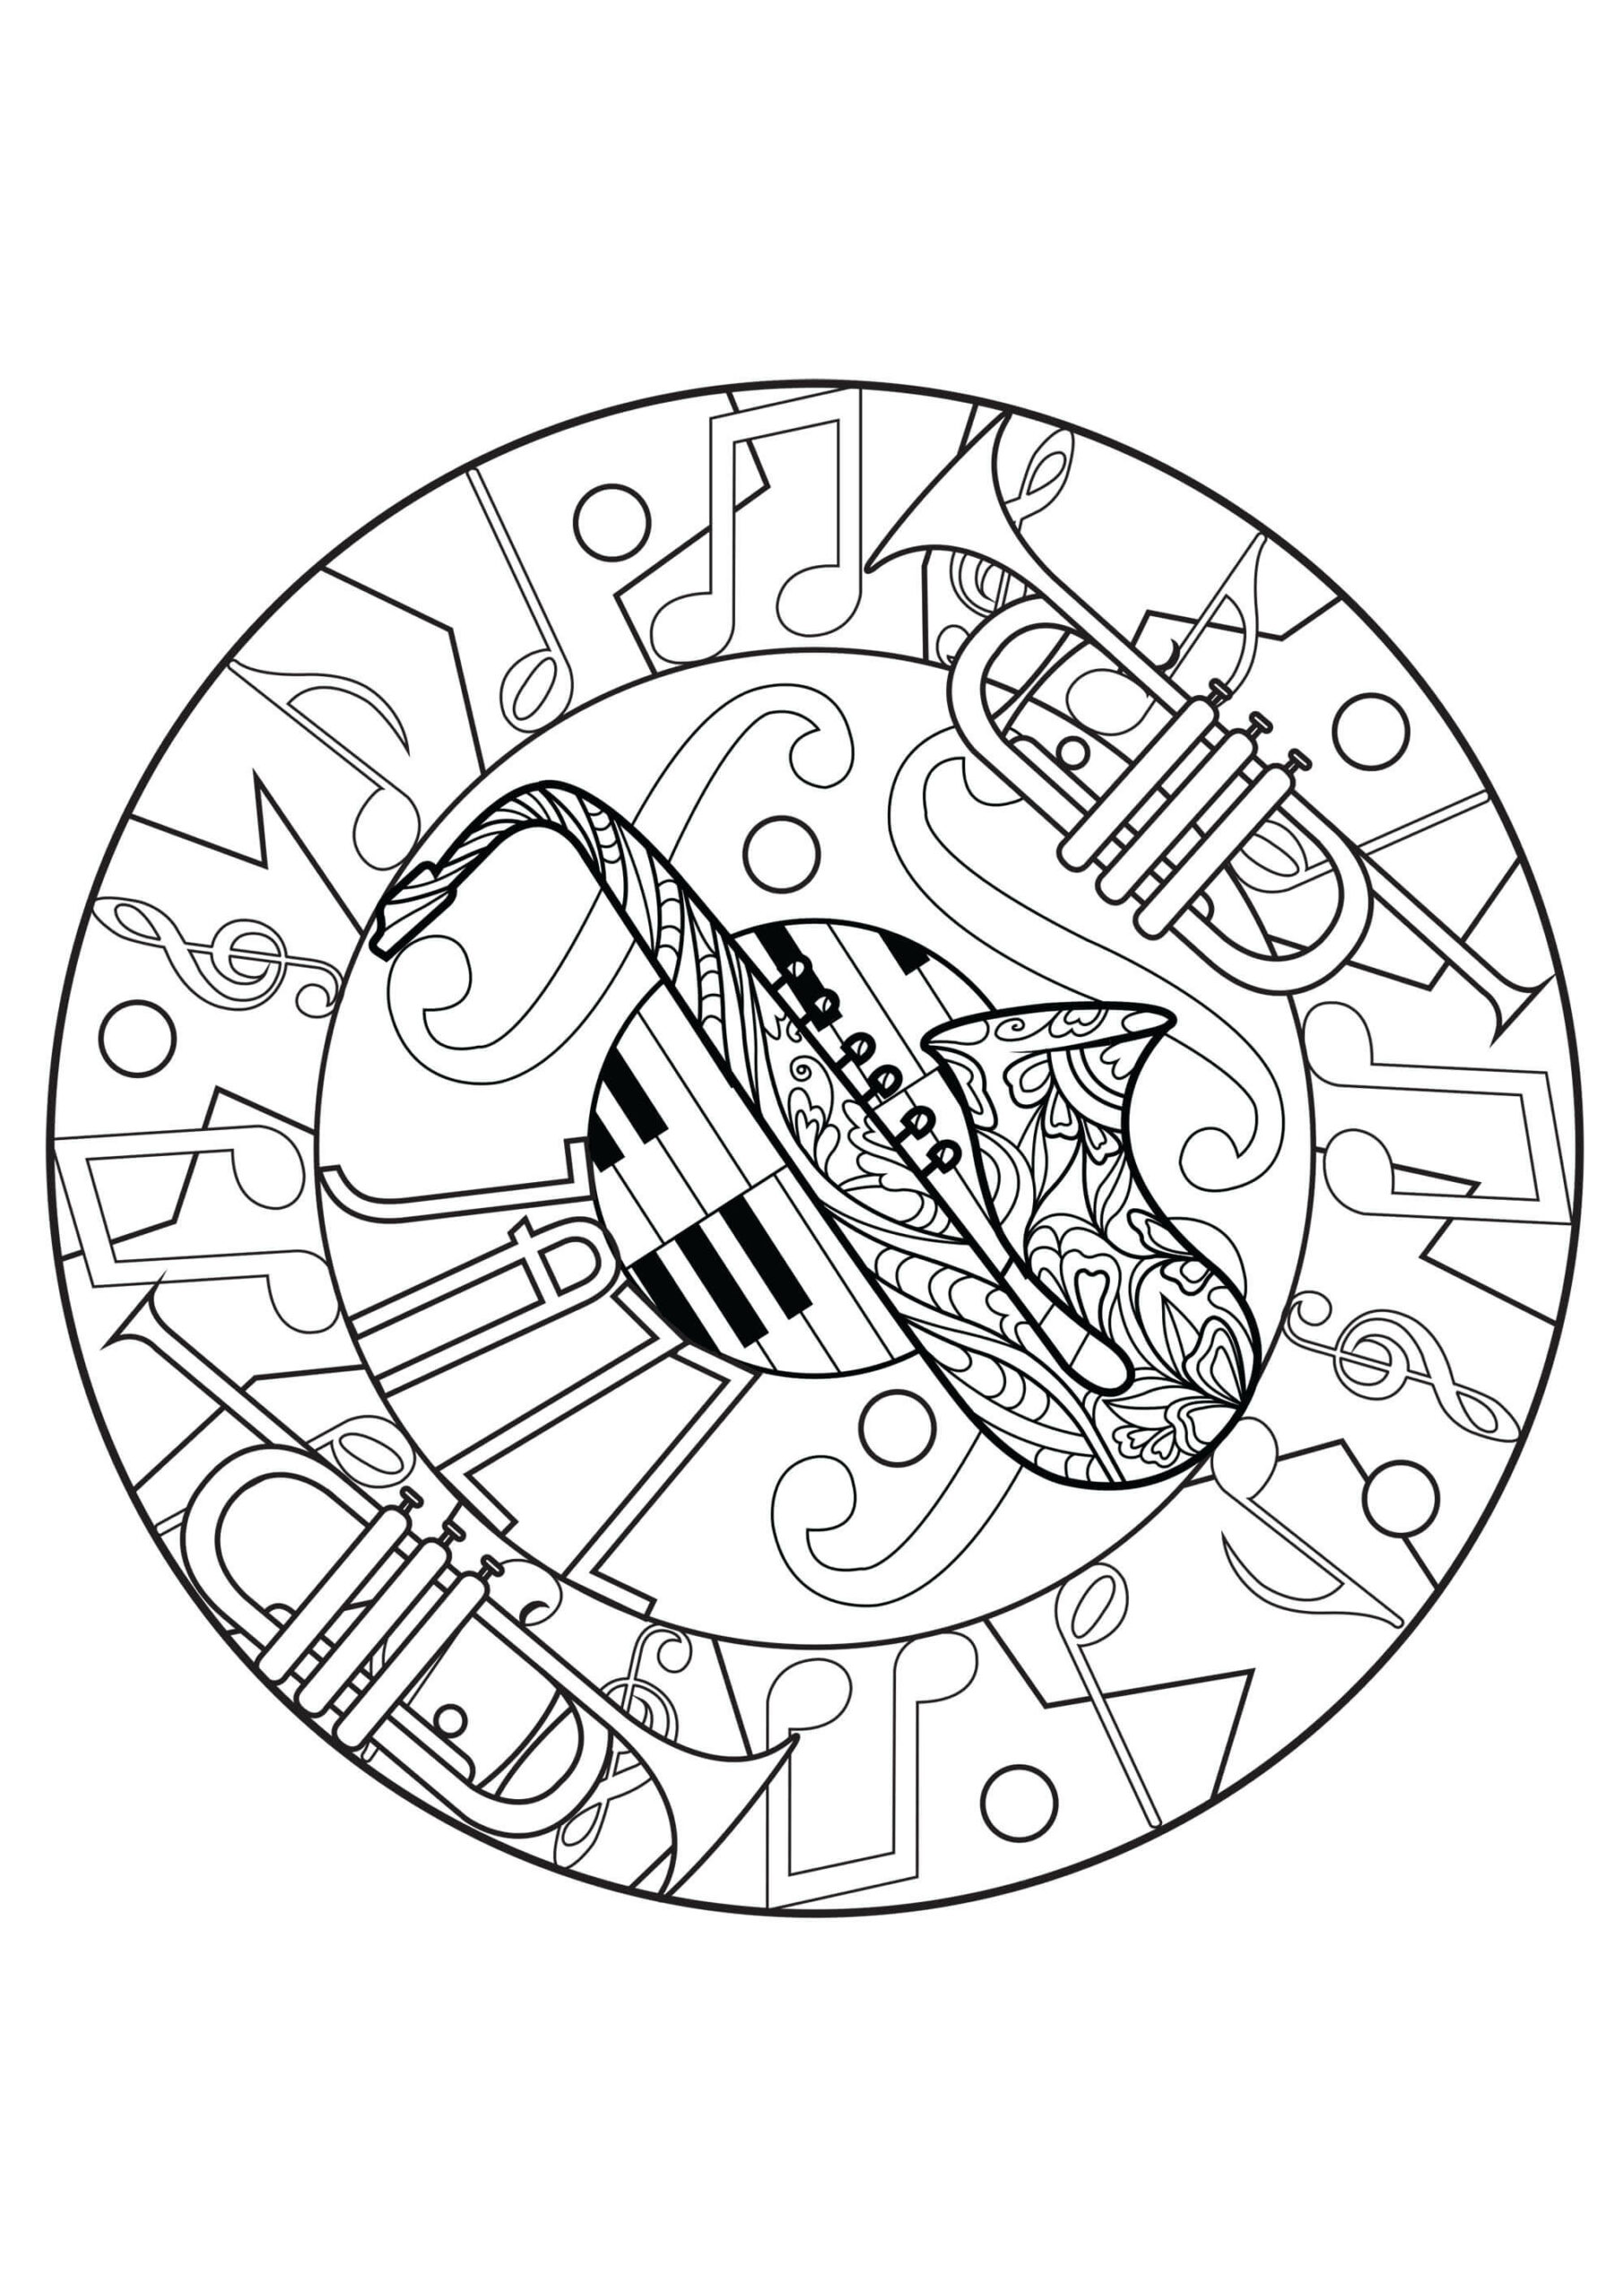 Mandala Trompette coloring page